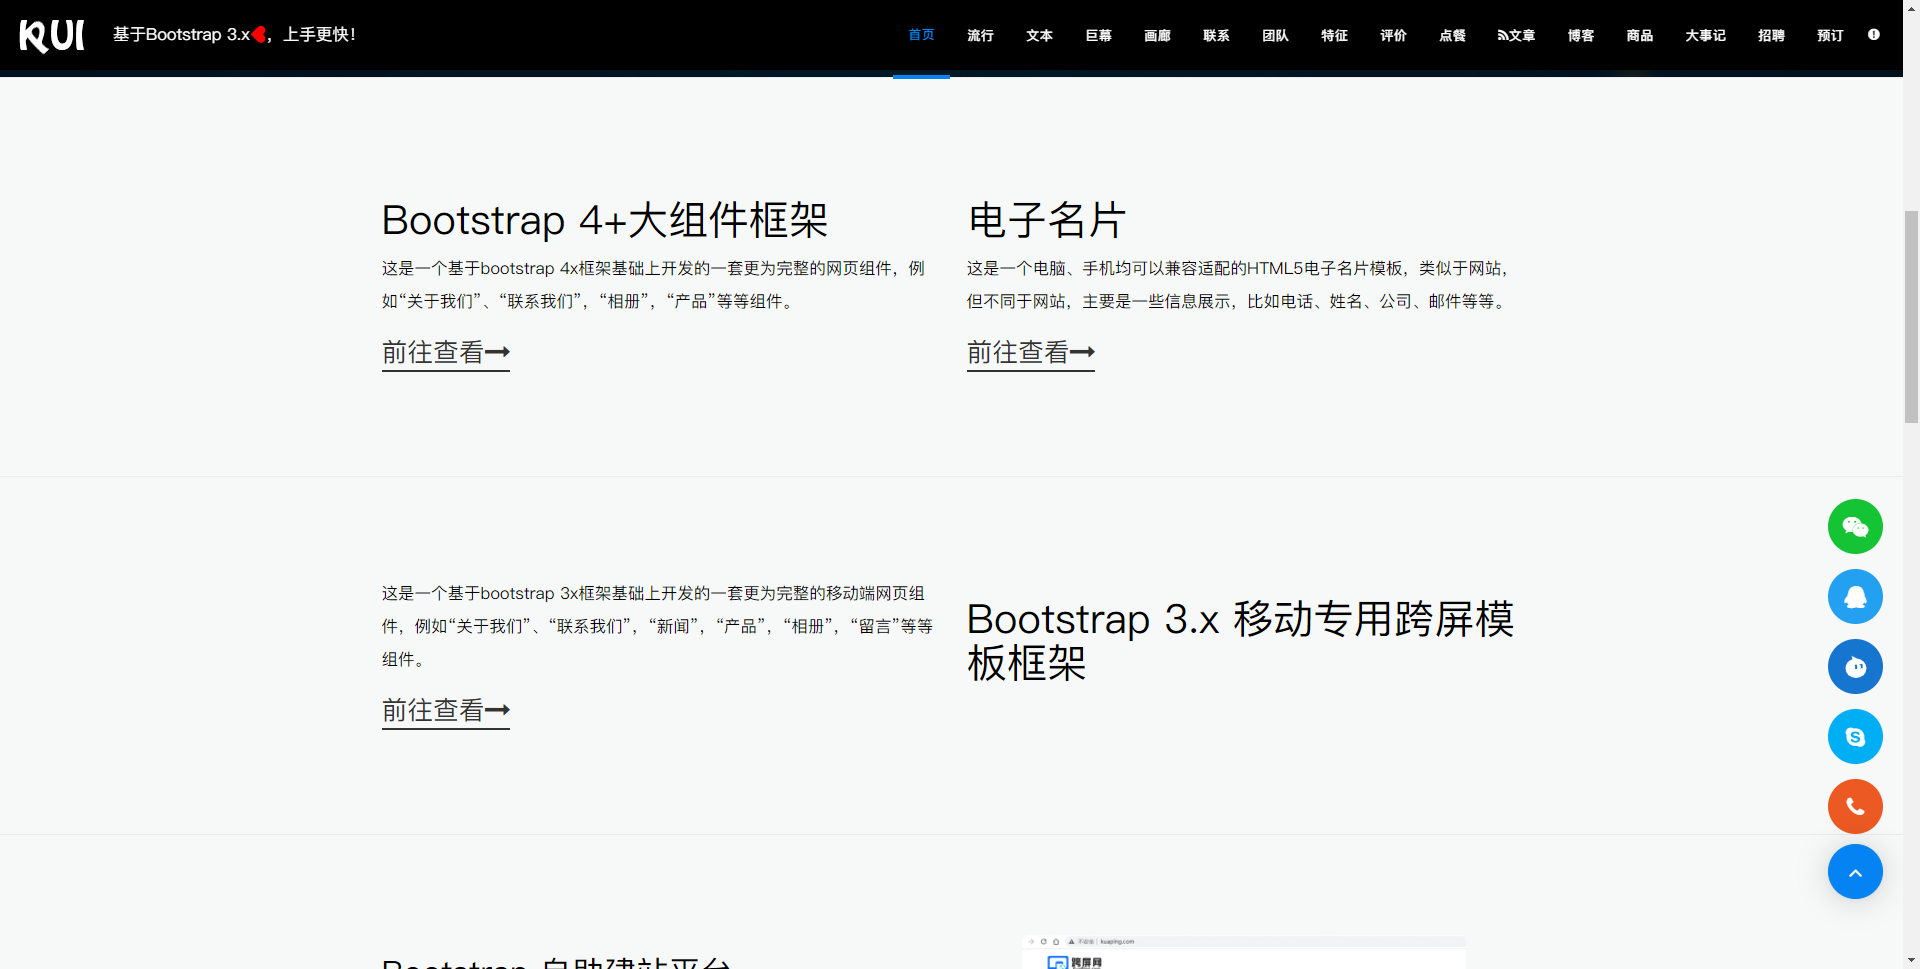 kuapingUI 3.2 版本发布，跨屏 UI-bootstrap 大组件 UI 框架